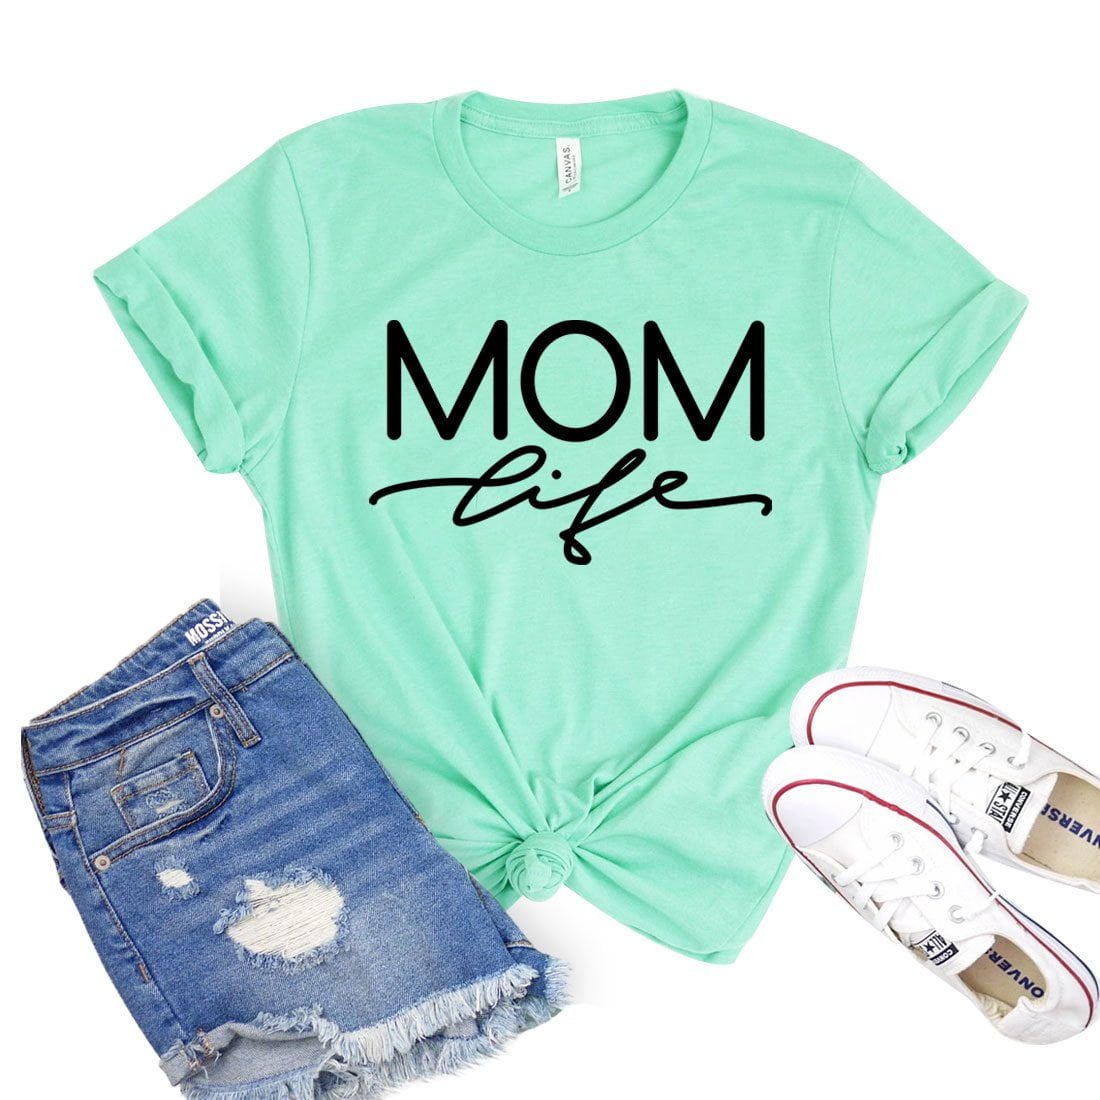 Shirts for Moms Mama Shirt Momlife Shirt Mama Bear T-Shirt Gift for Mom Cute Mom Shirt Mom Life Shirt